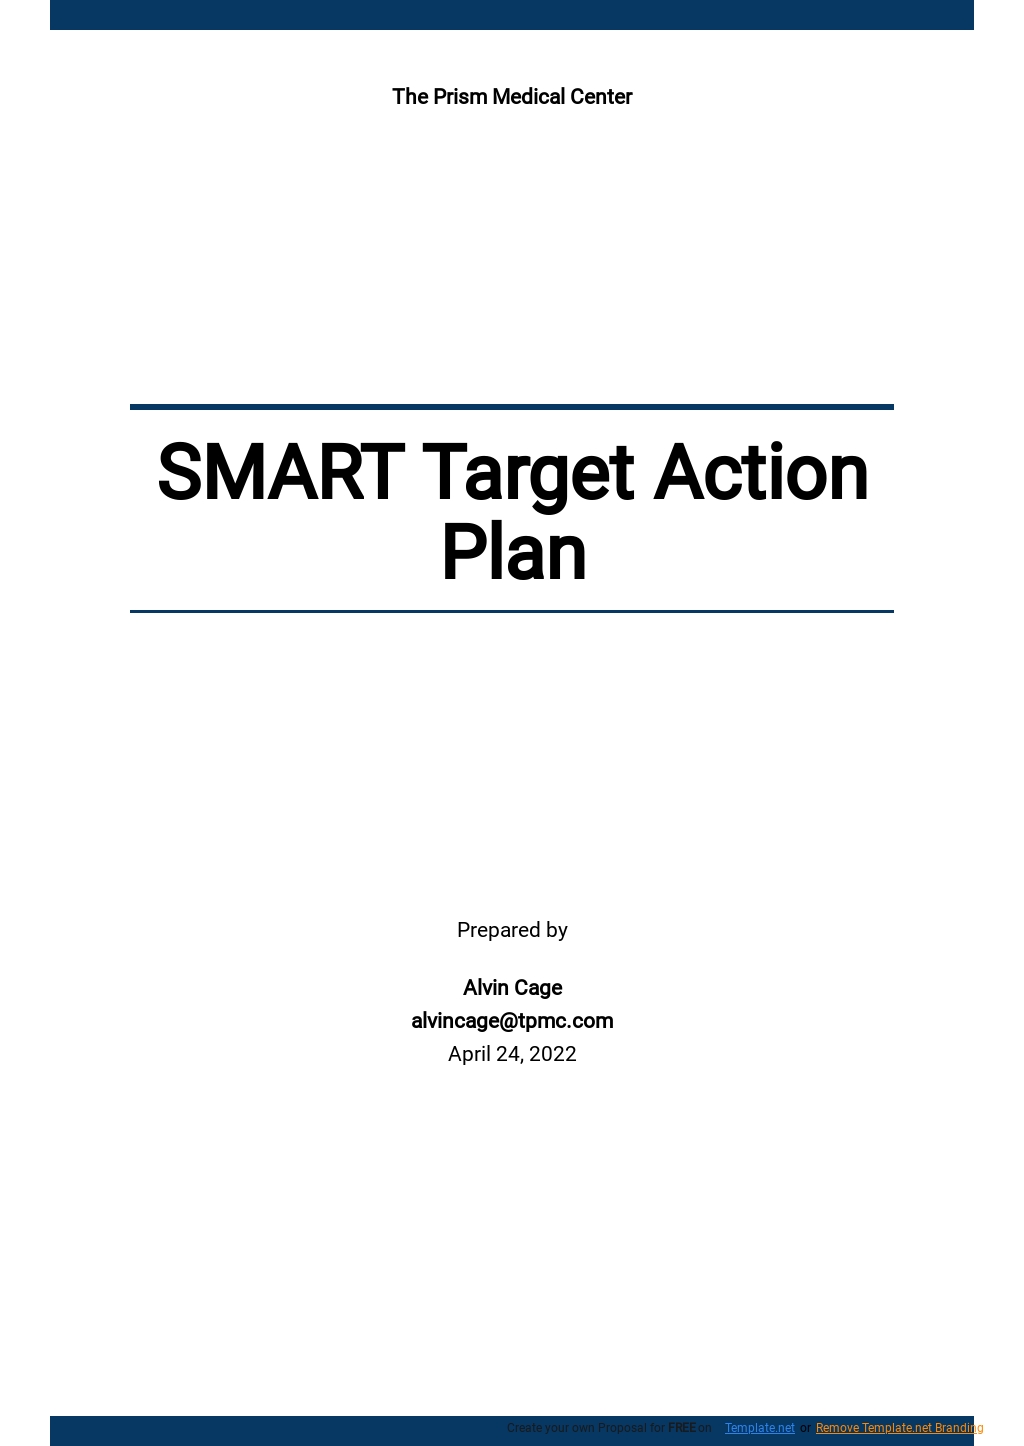 Smart Target Action Plan Template